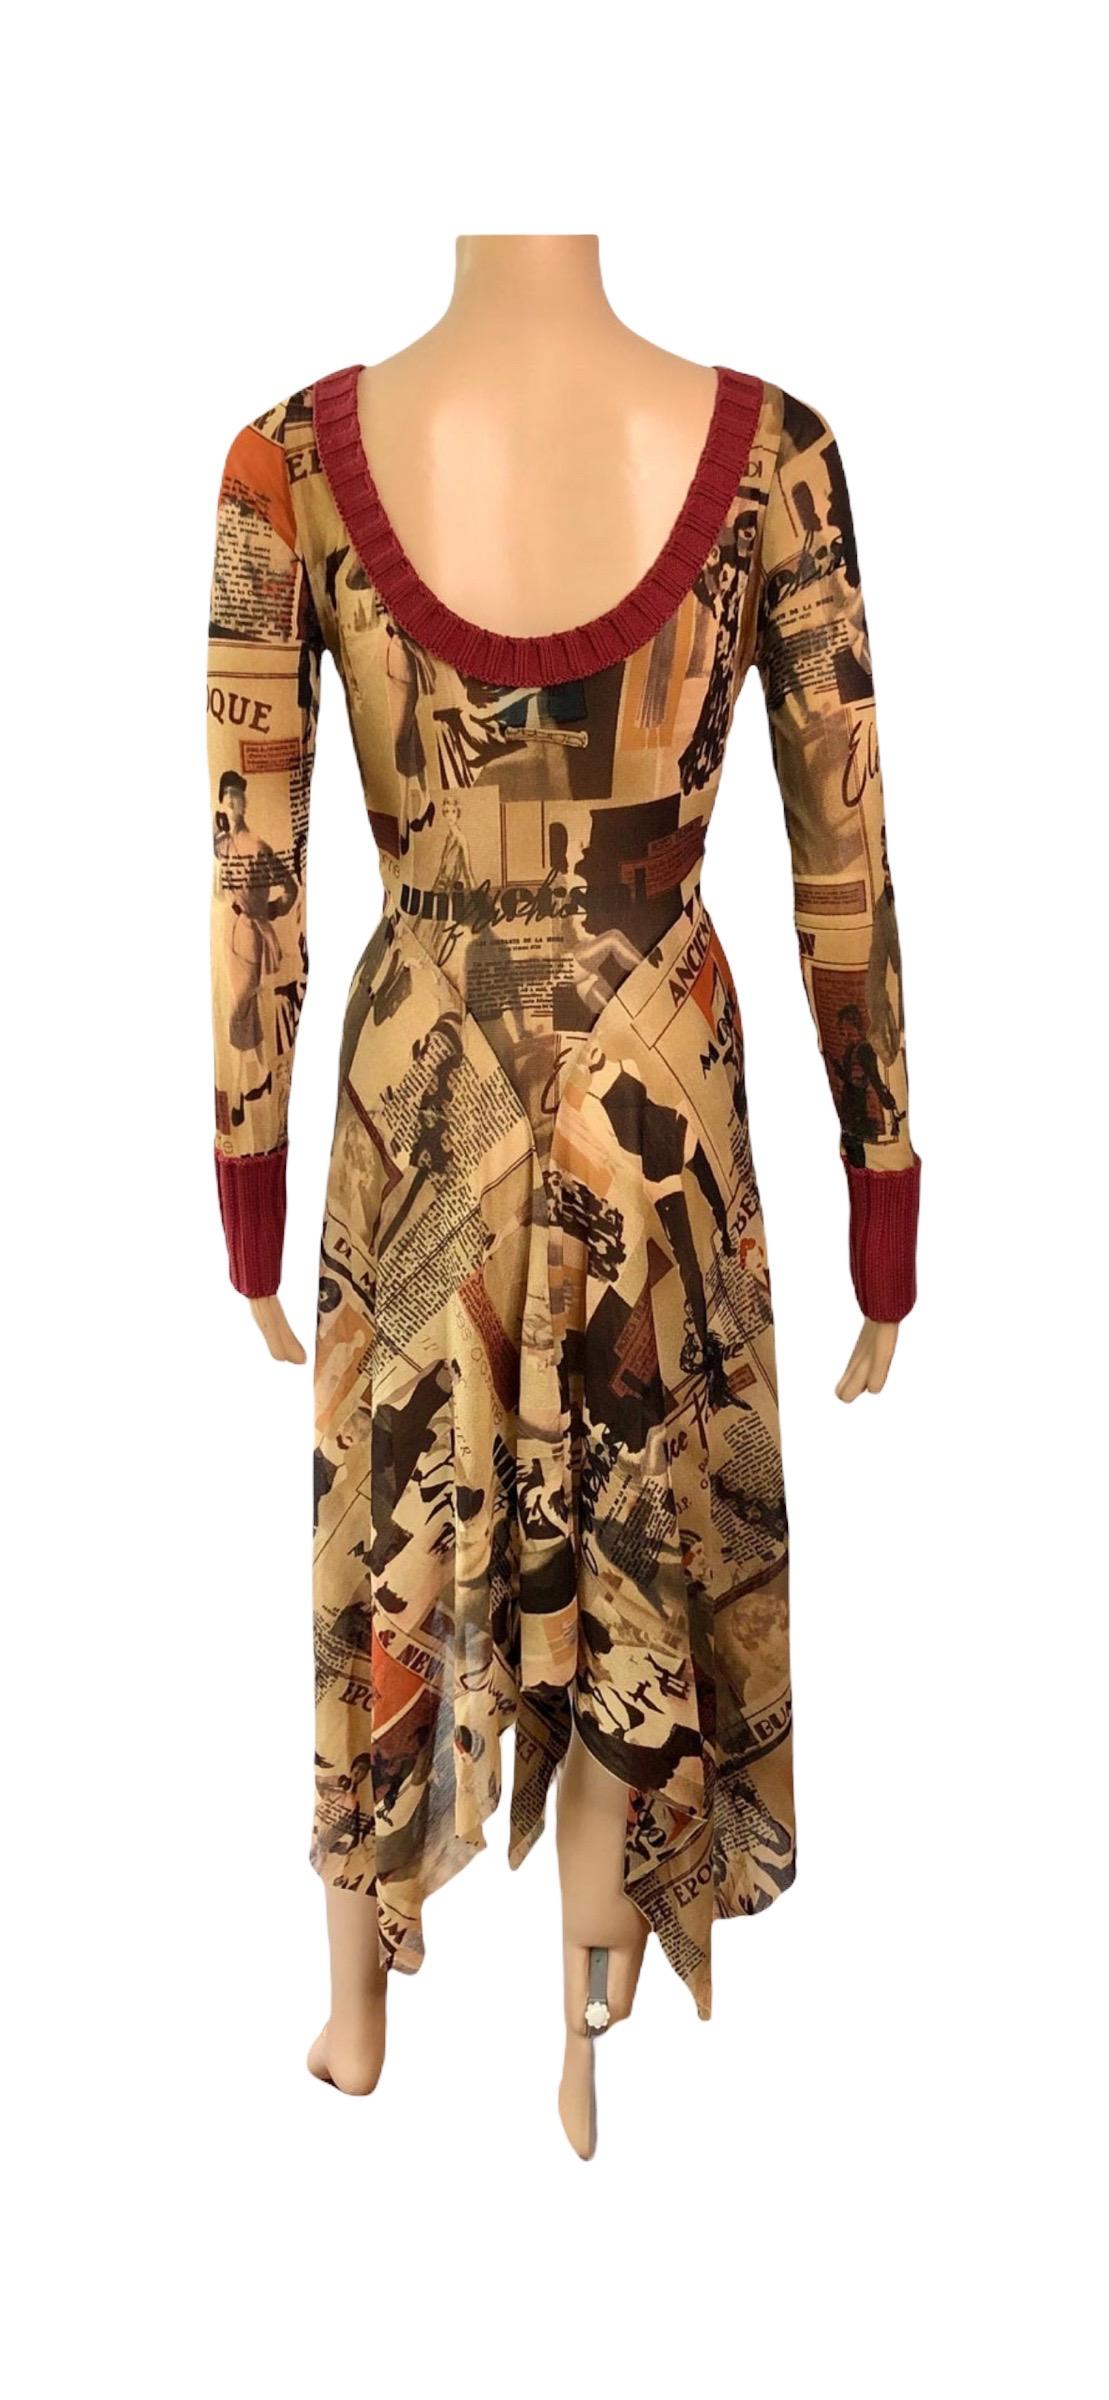 Jean Paul Gaultier S/S 1996 Vintage Belle Epoque Print Mesh Maxi Dress In Good Condition For Sale In Naples, FL